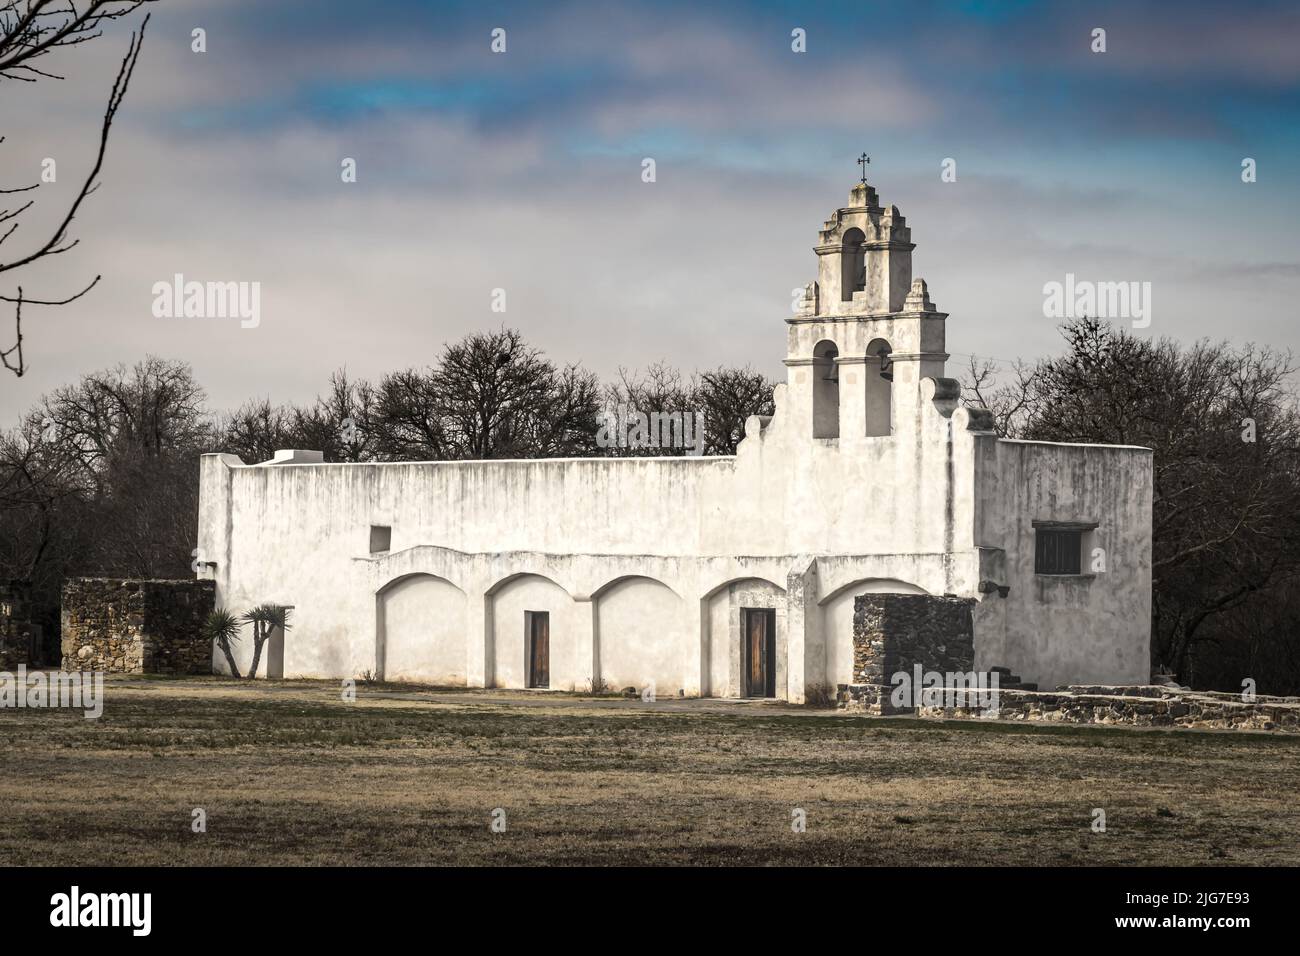 Mission San Juan ist ein starker Teil des San Antonio Missions National Historical Park in Südtexas. Stockfoto